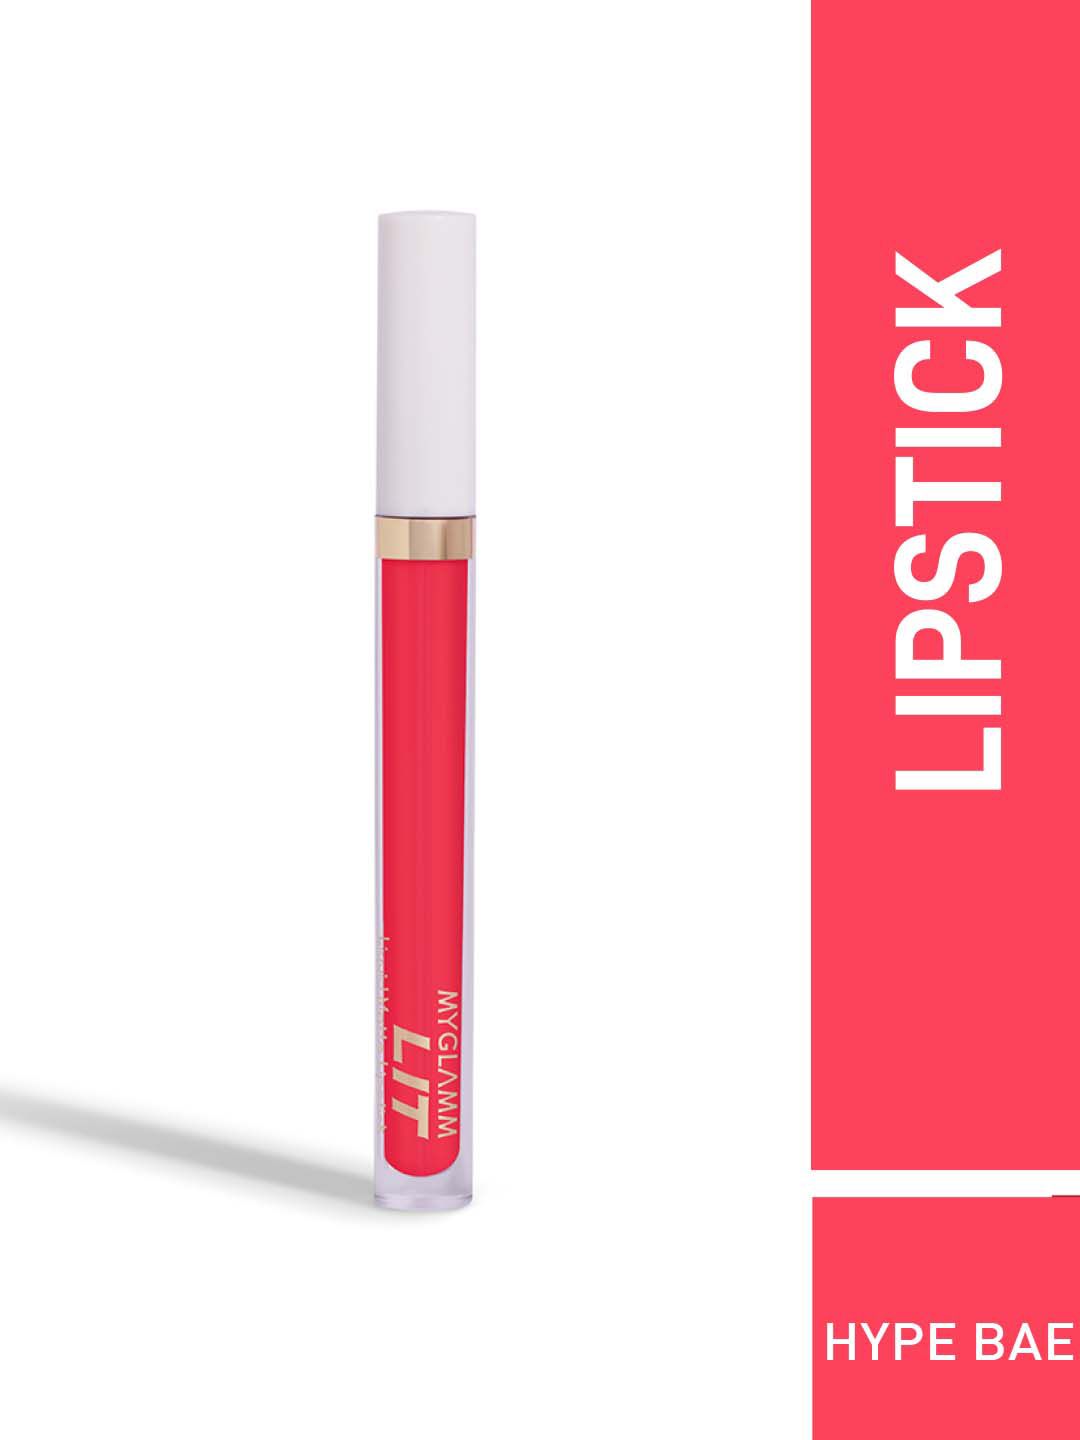 MyGlamm LIT Liquid Matte Lipstick 3 ml - Hype Bae Price in India